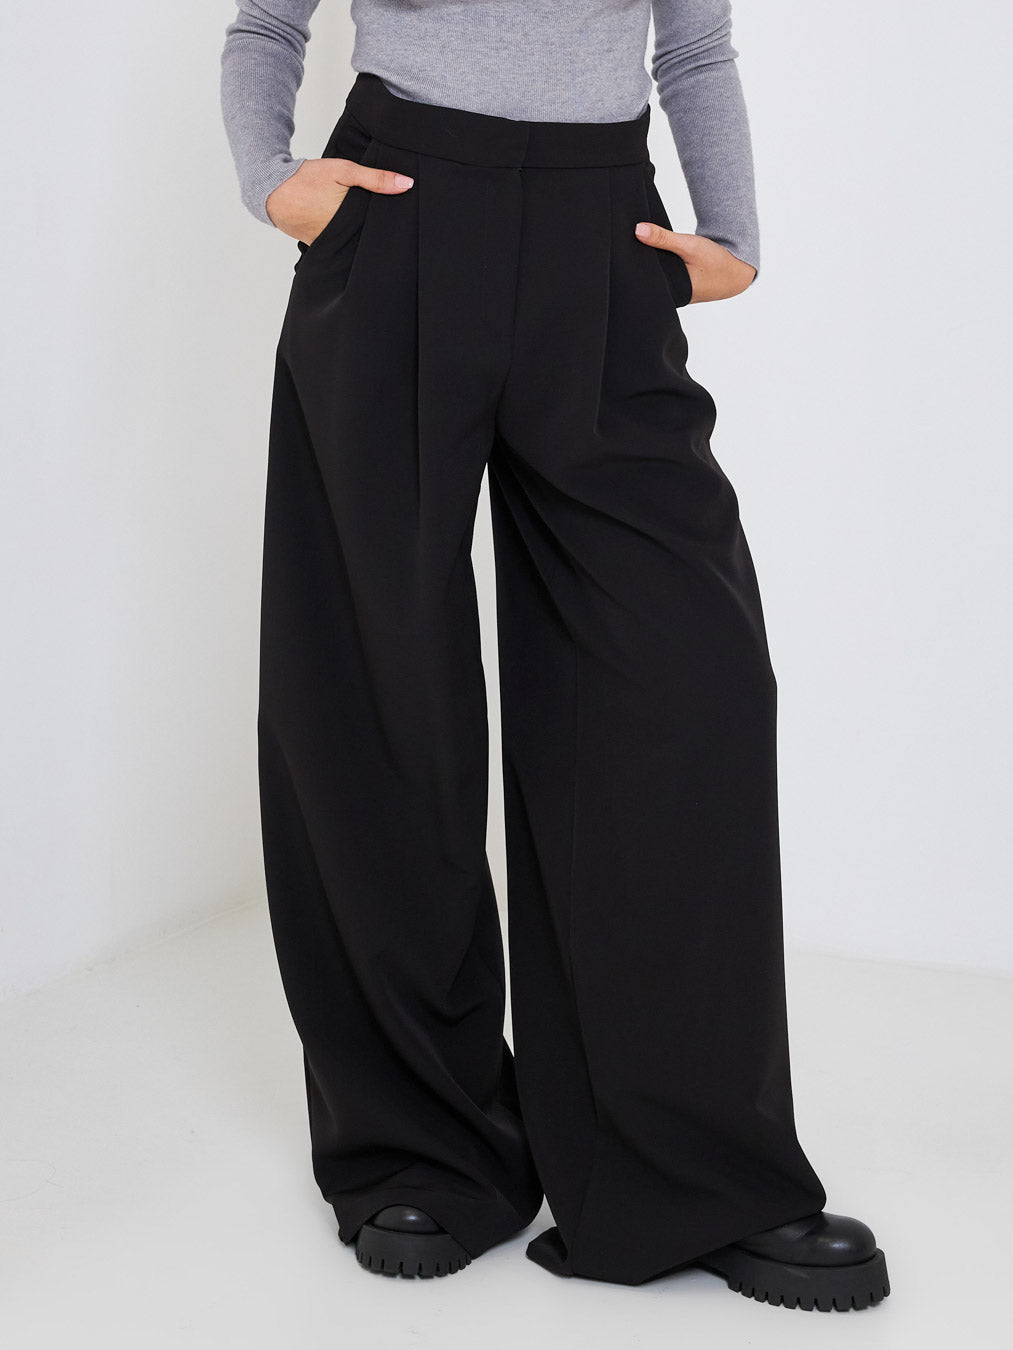 Kostumn black palazzo trousers with logoed waist